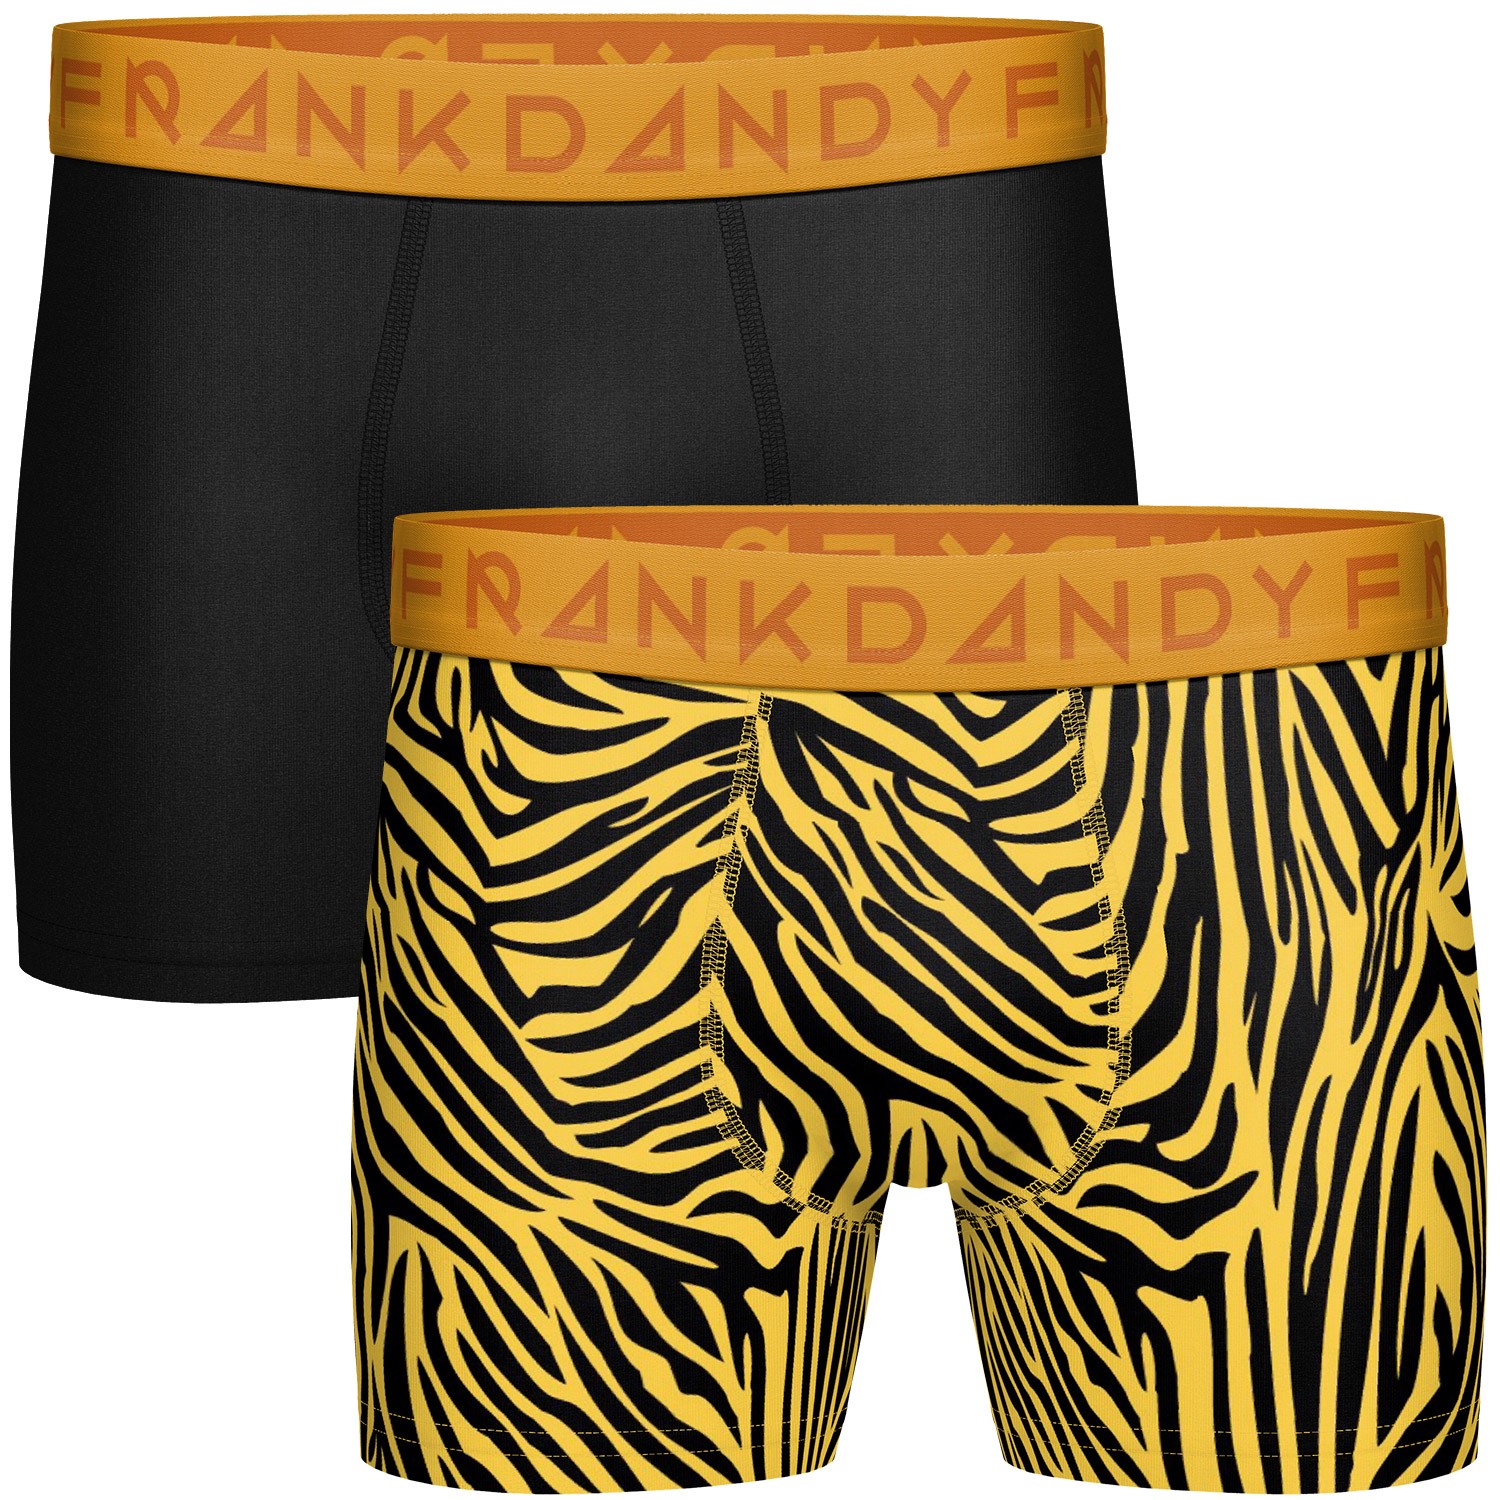 Frank Dandy Tiger Boxers